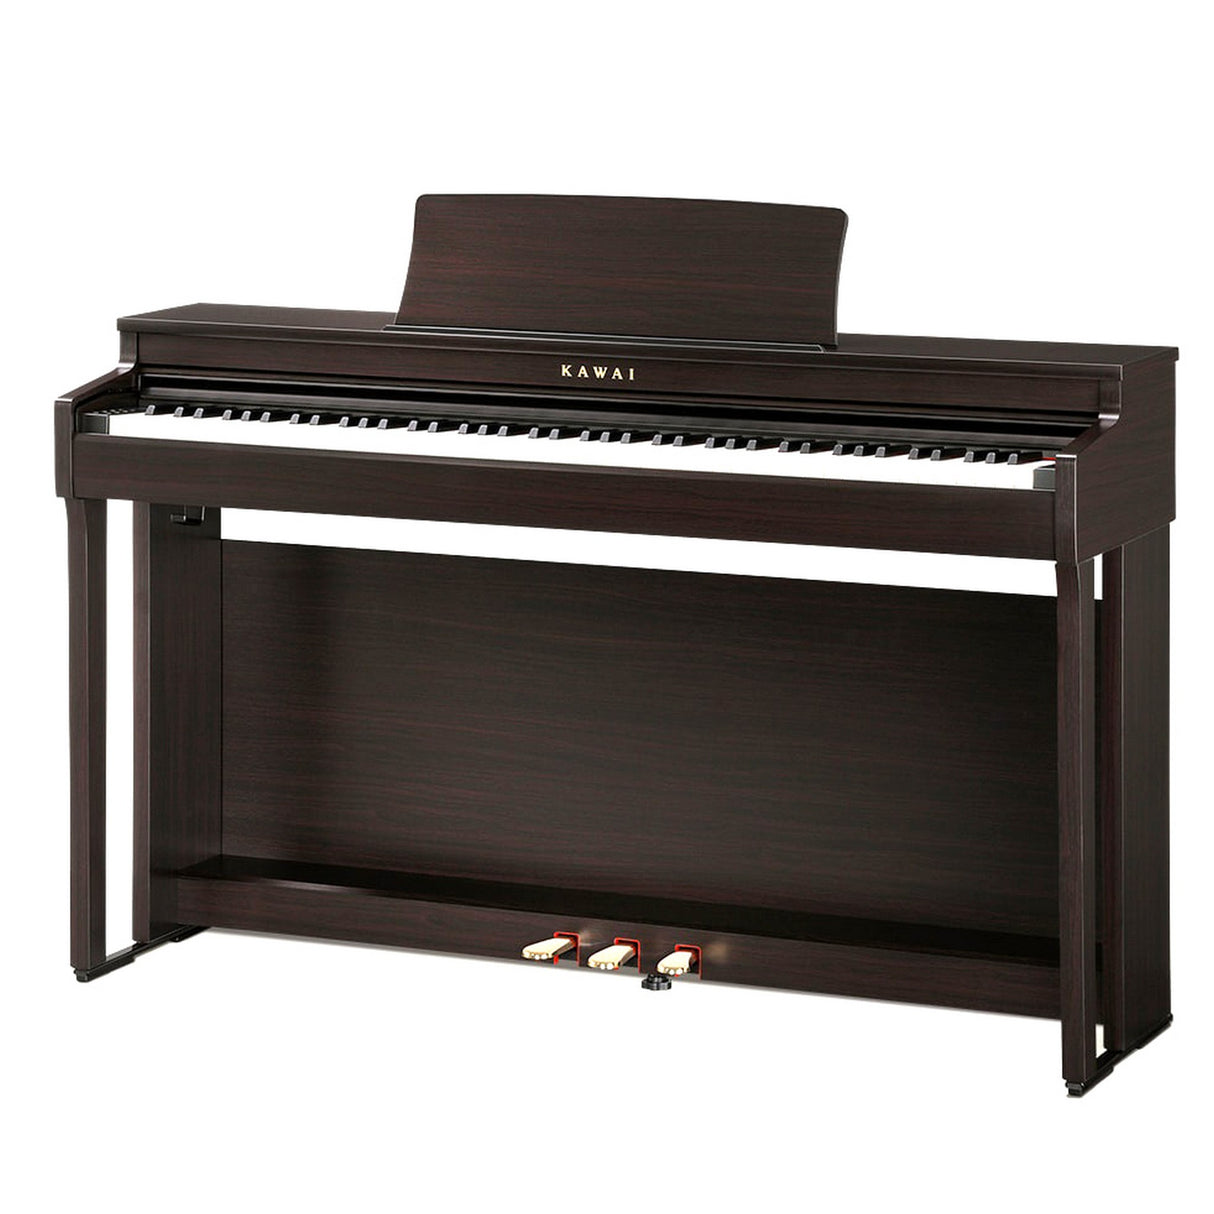 Kawai CN201 88-Key Digital Piano with Bench, Rosewood